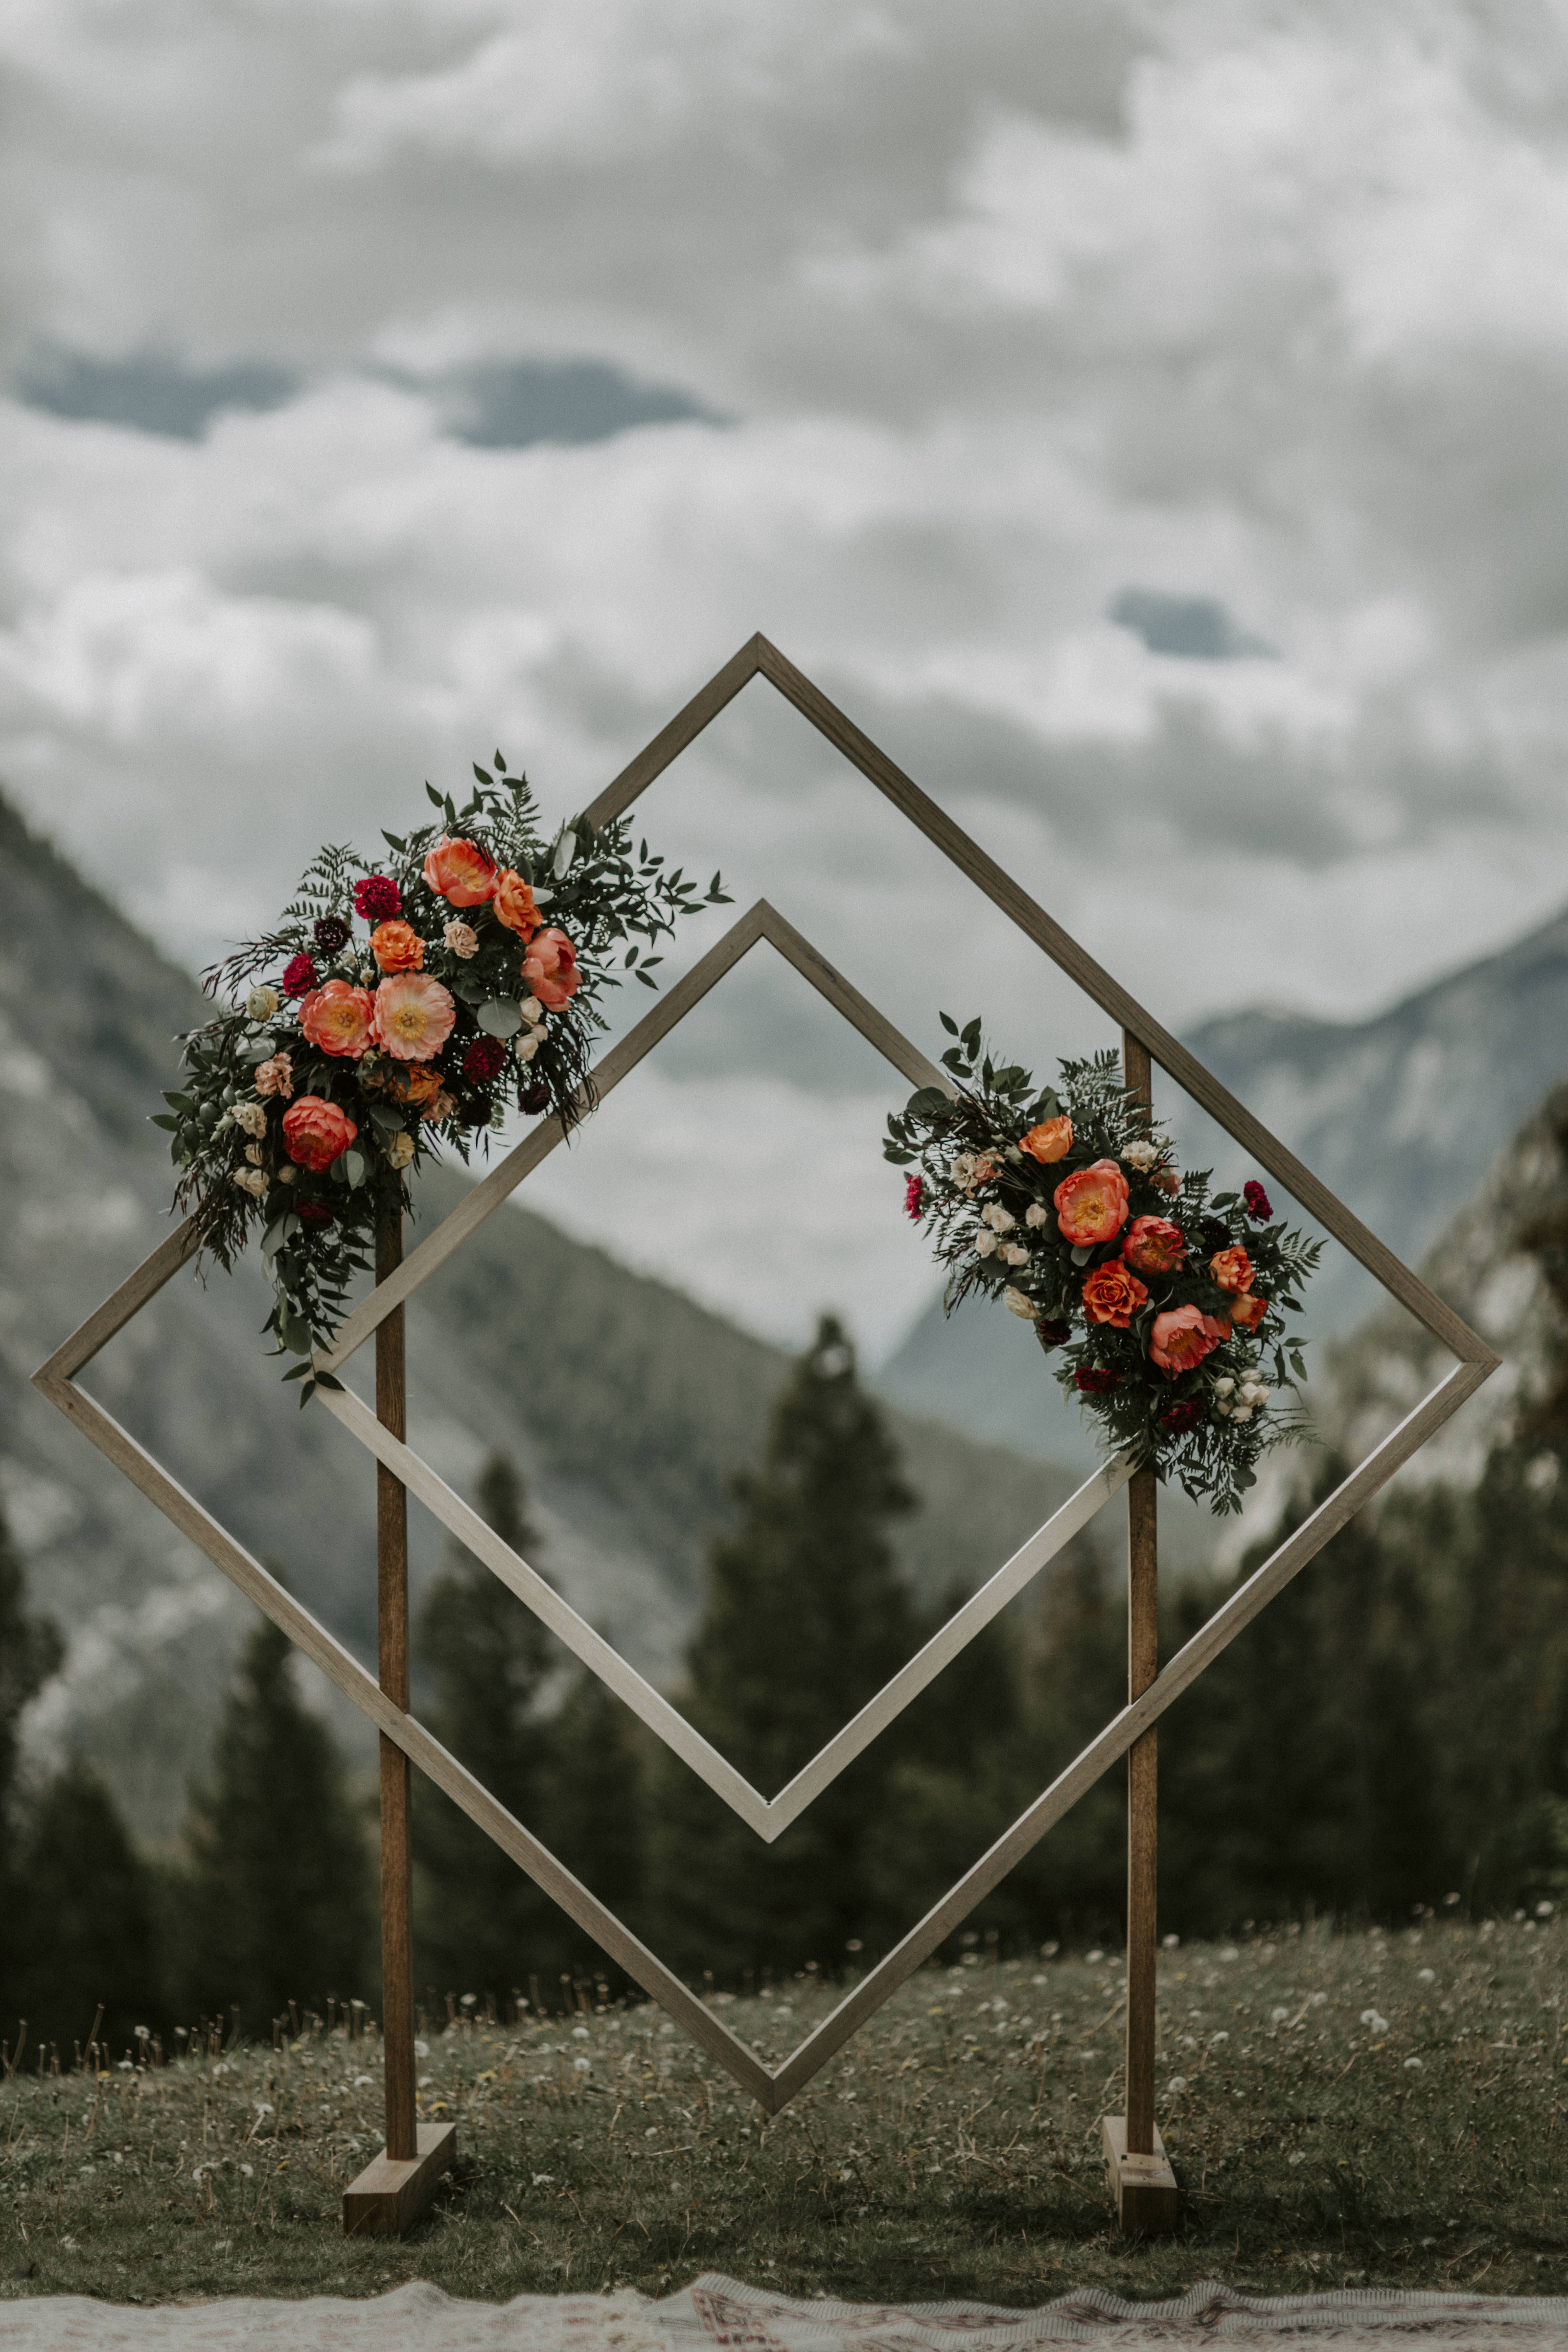 Wooden Diamond Shaped Wedding Arch | Banff National Park - Wooden Diamond Shaped Wedding Arch | Banff National Park -   17 diy Wedding arch ideas